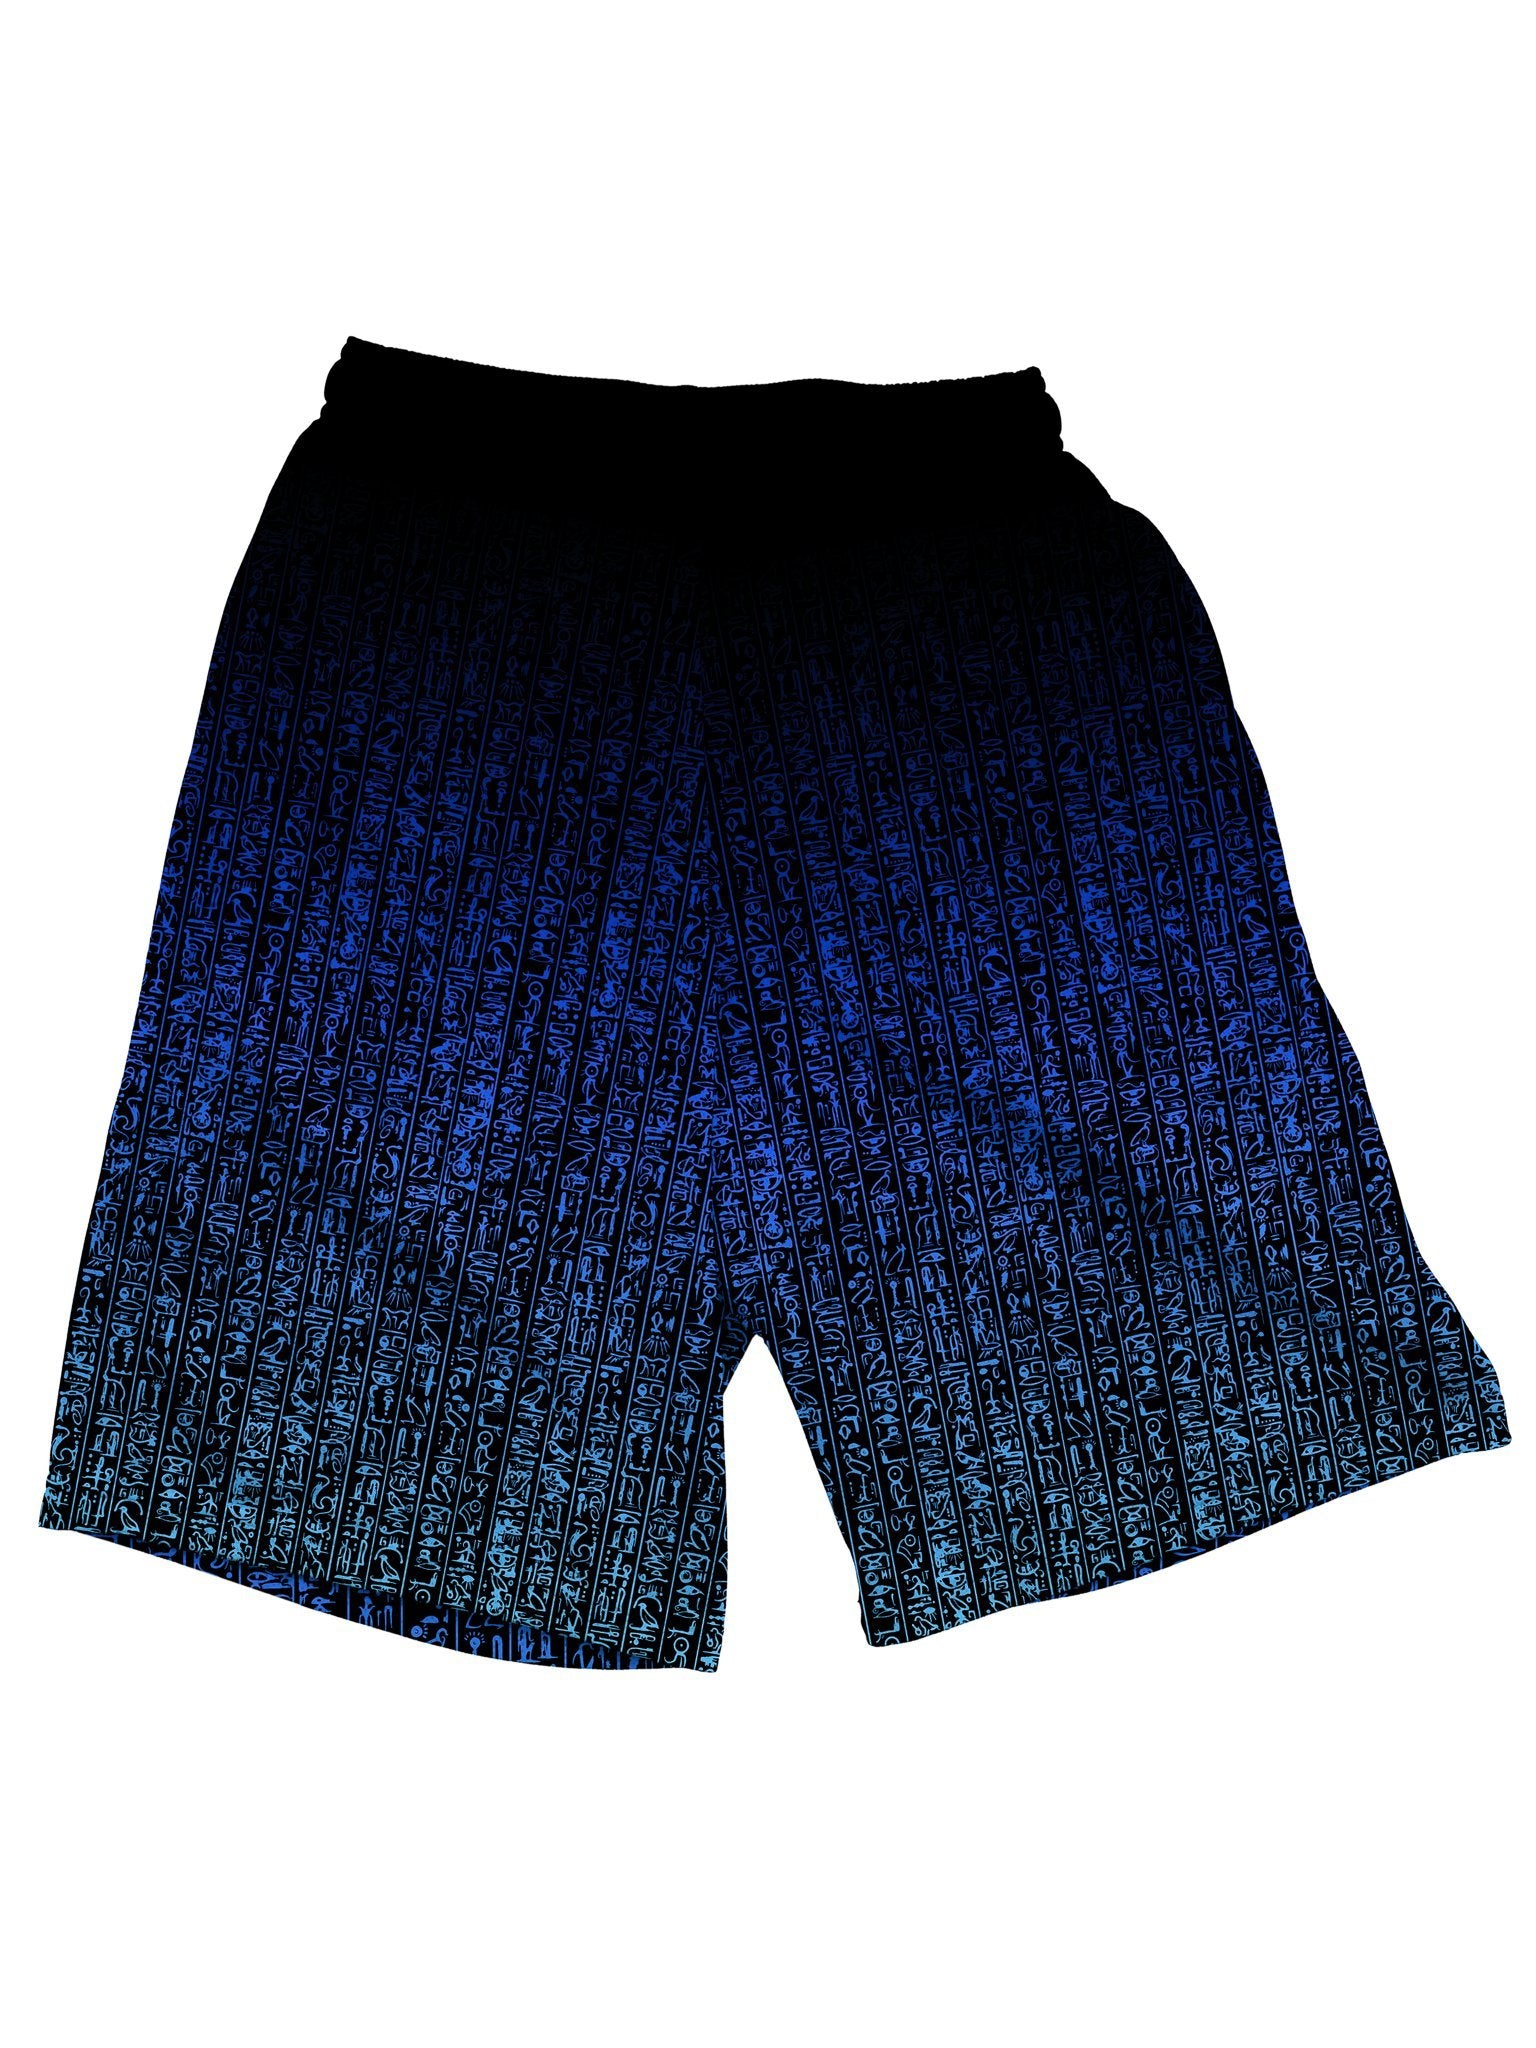 Egyptian Glyphs (Blue) Shorts Mens Shorts Electro Threads 